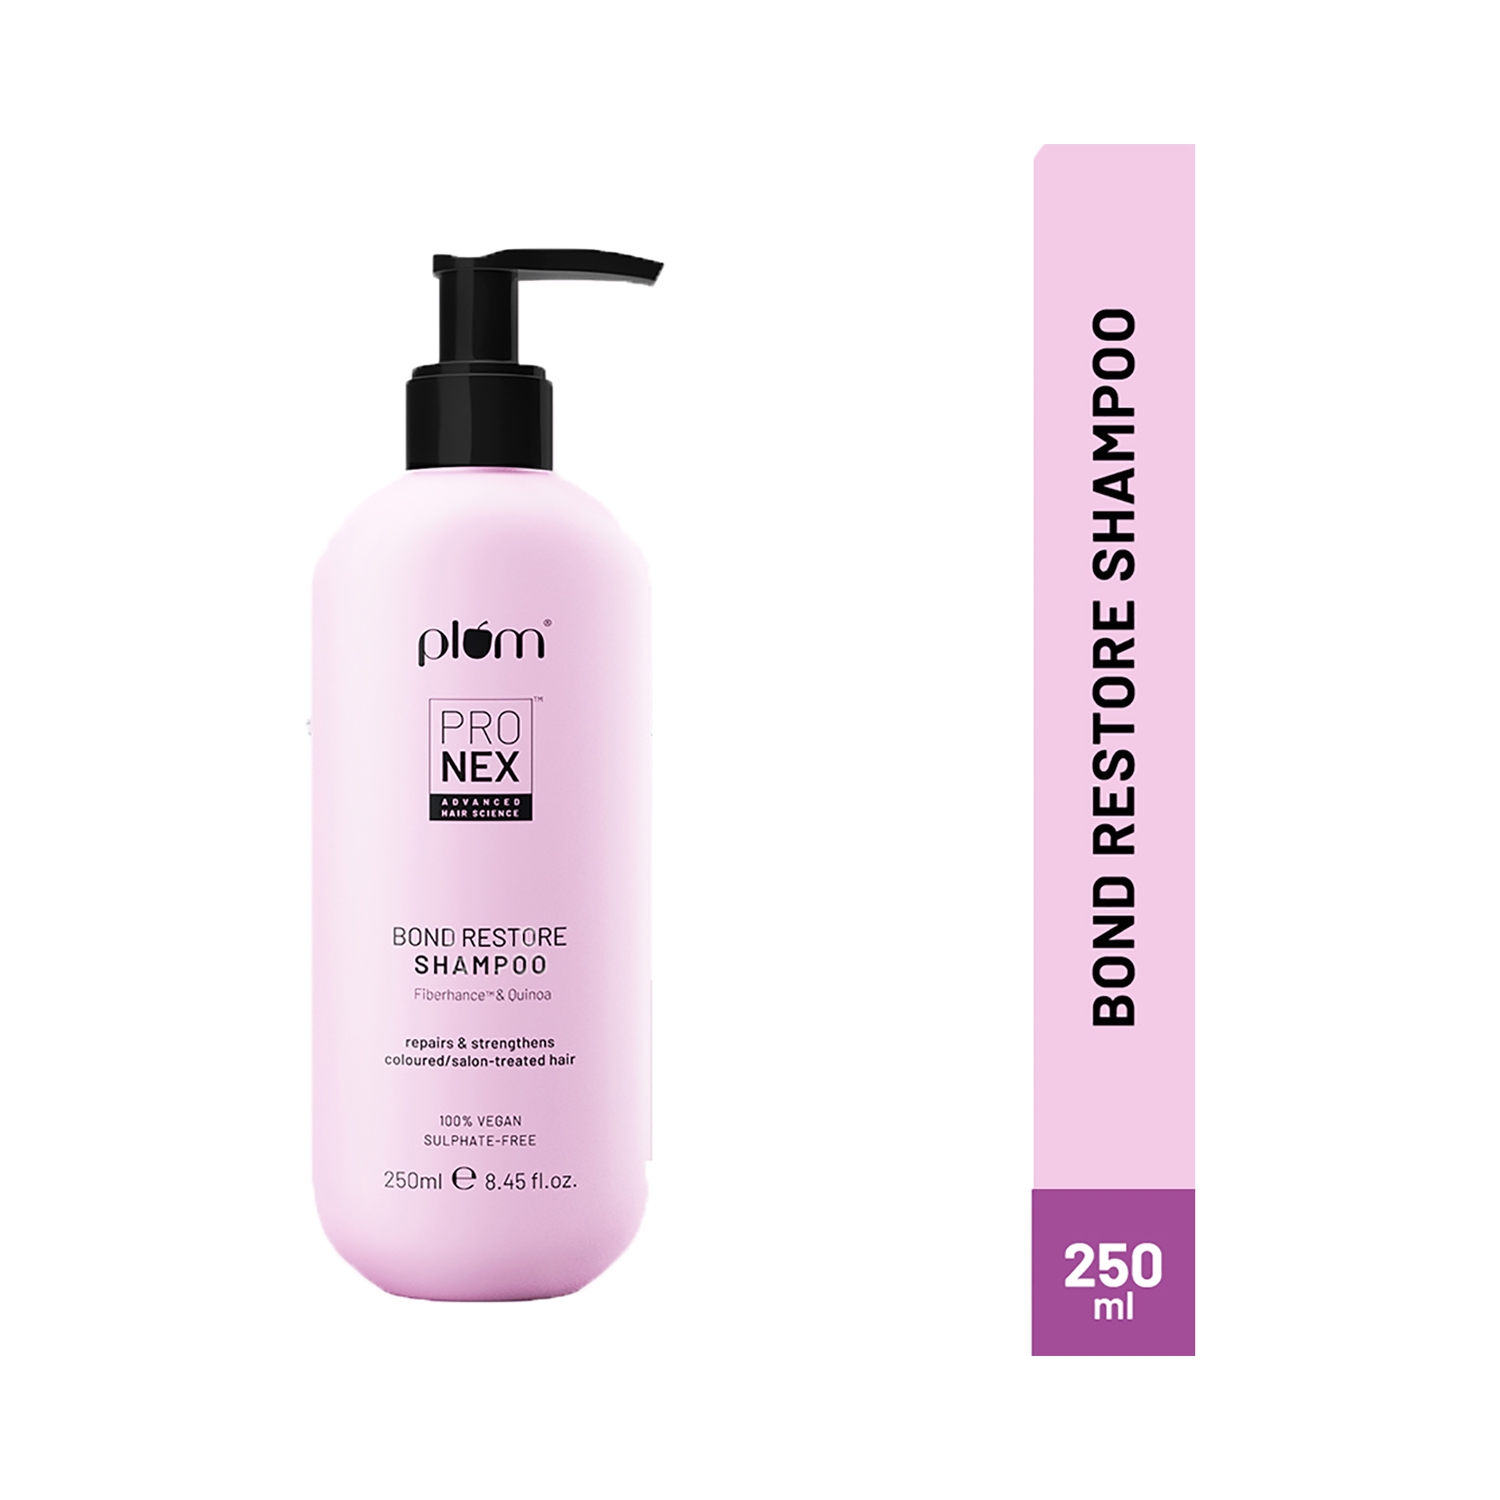 Plum Pro Nex Bond Restore Shampoo (250ml)